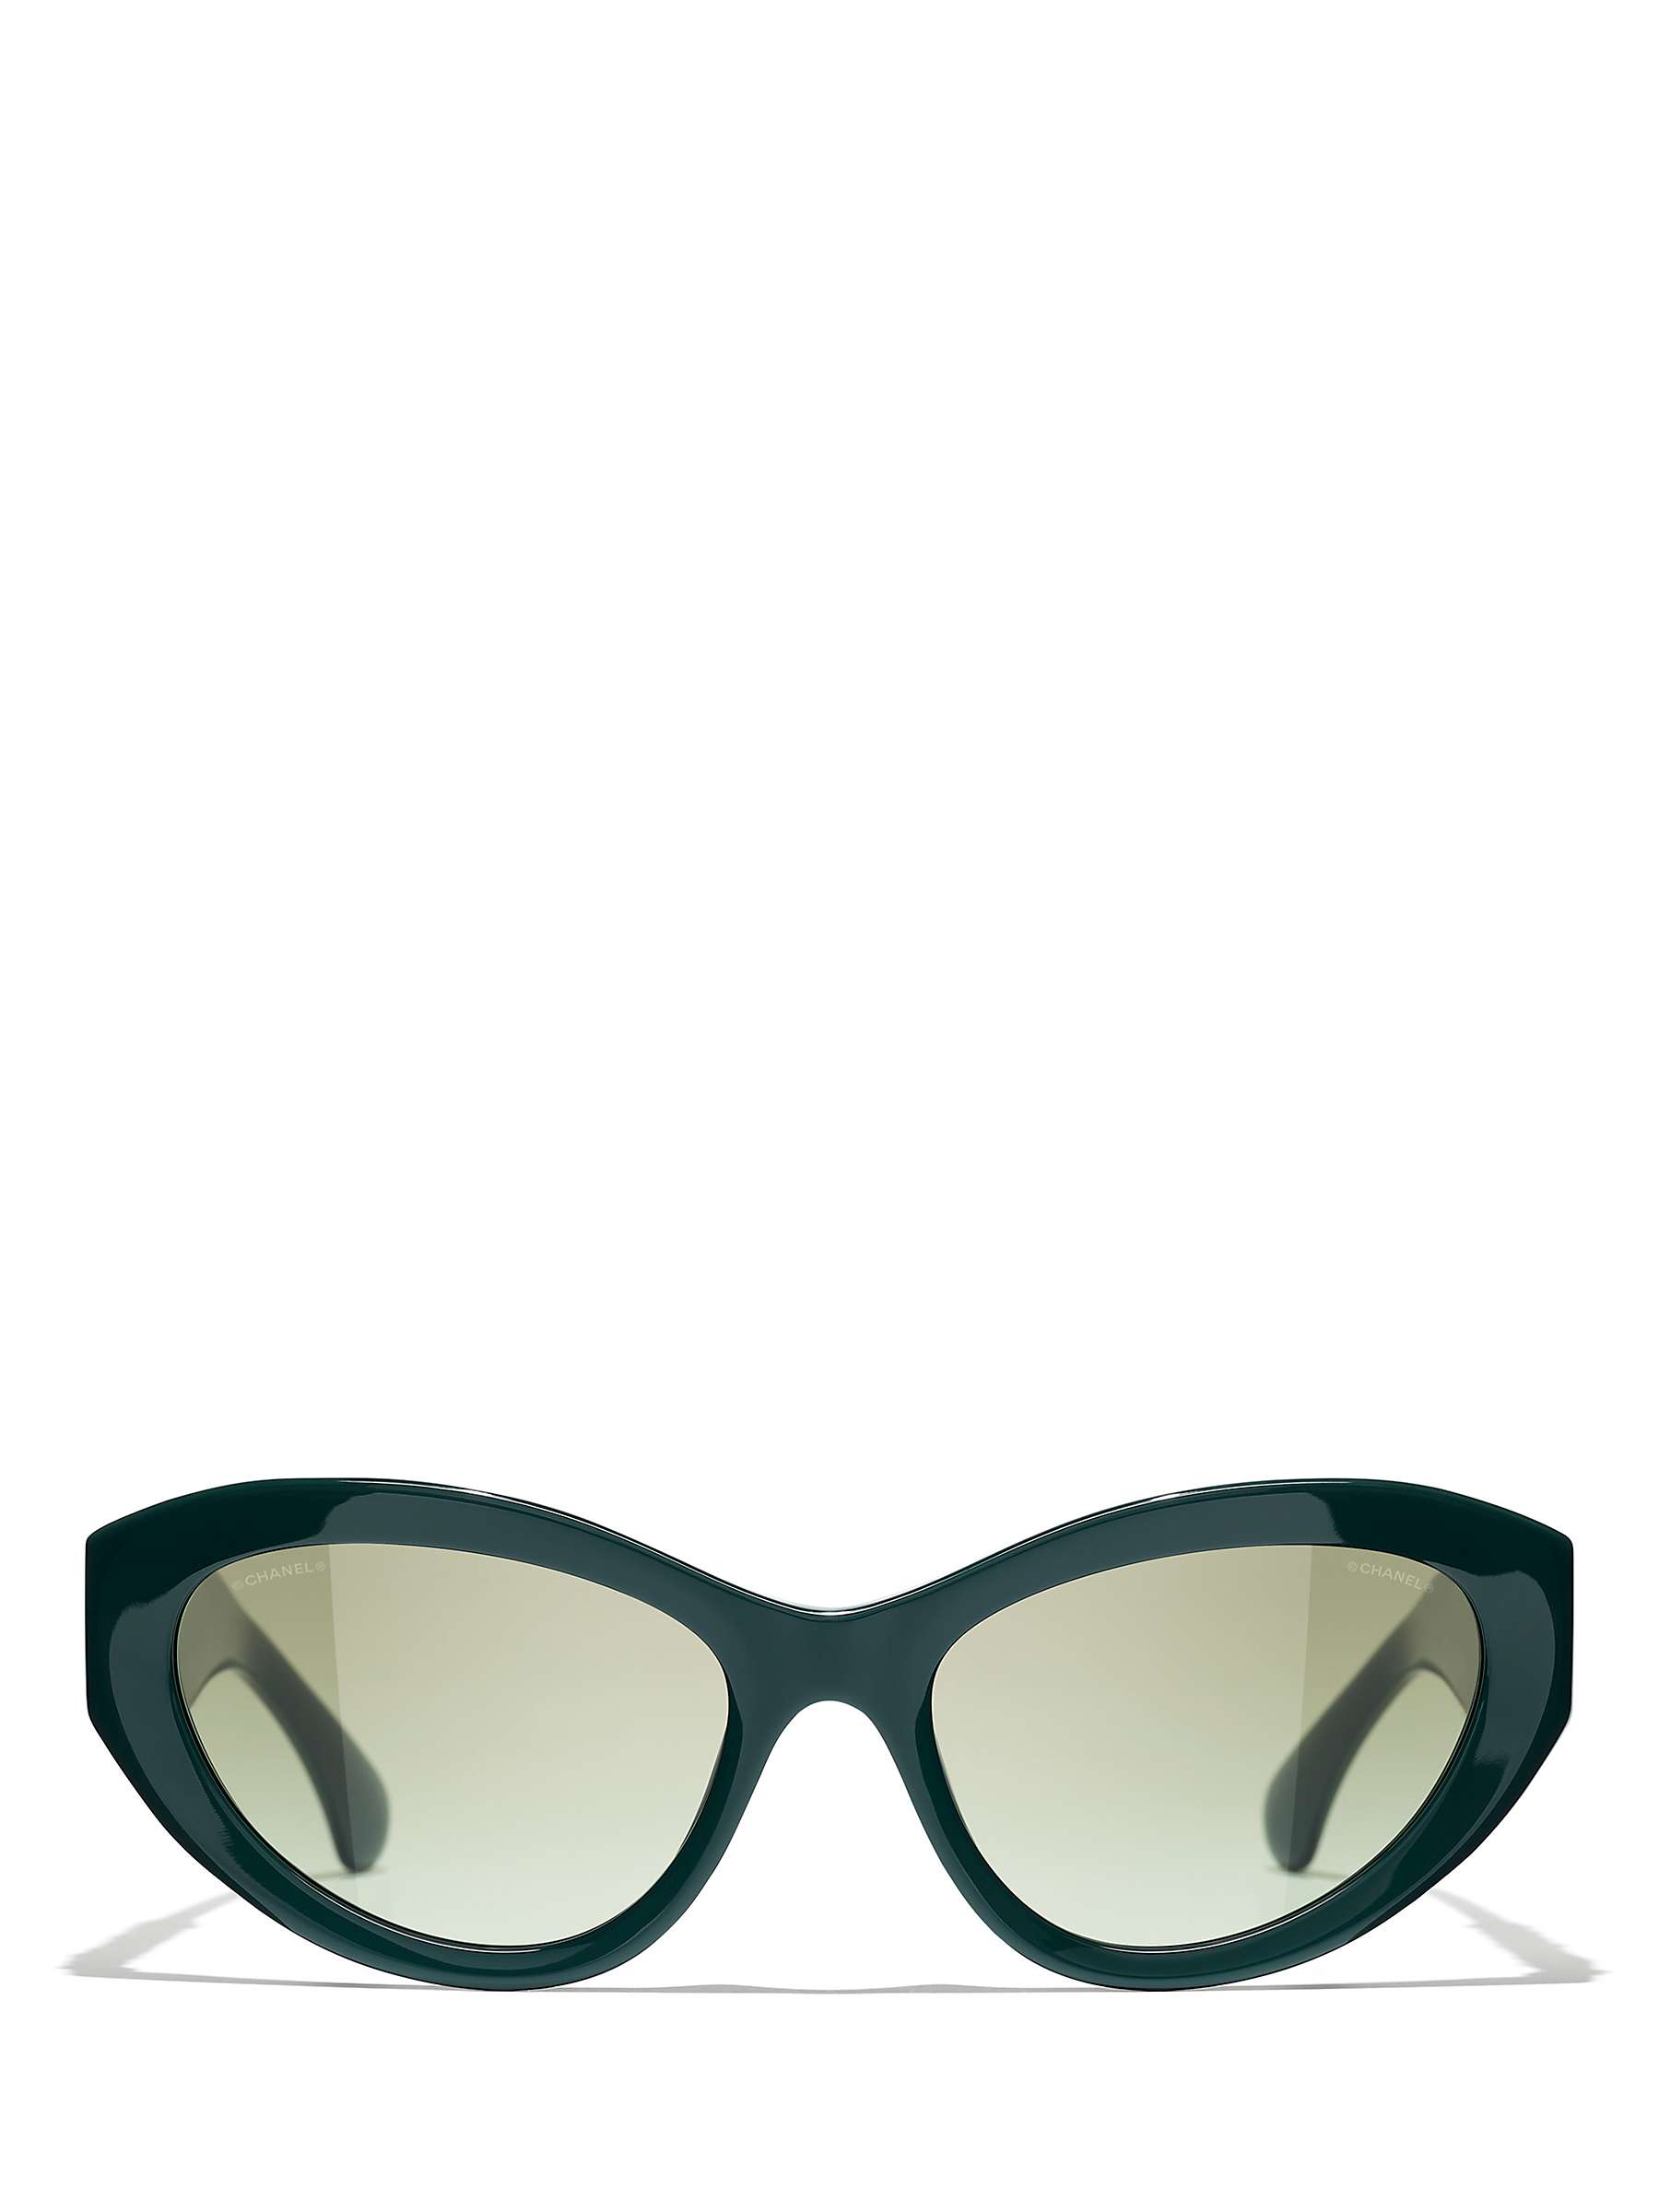 Buy CHANEL Cat Eye Sunglasses CH5513 Green Vandome/Green Gradient Online at johnlewis.com